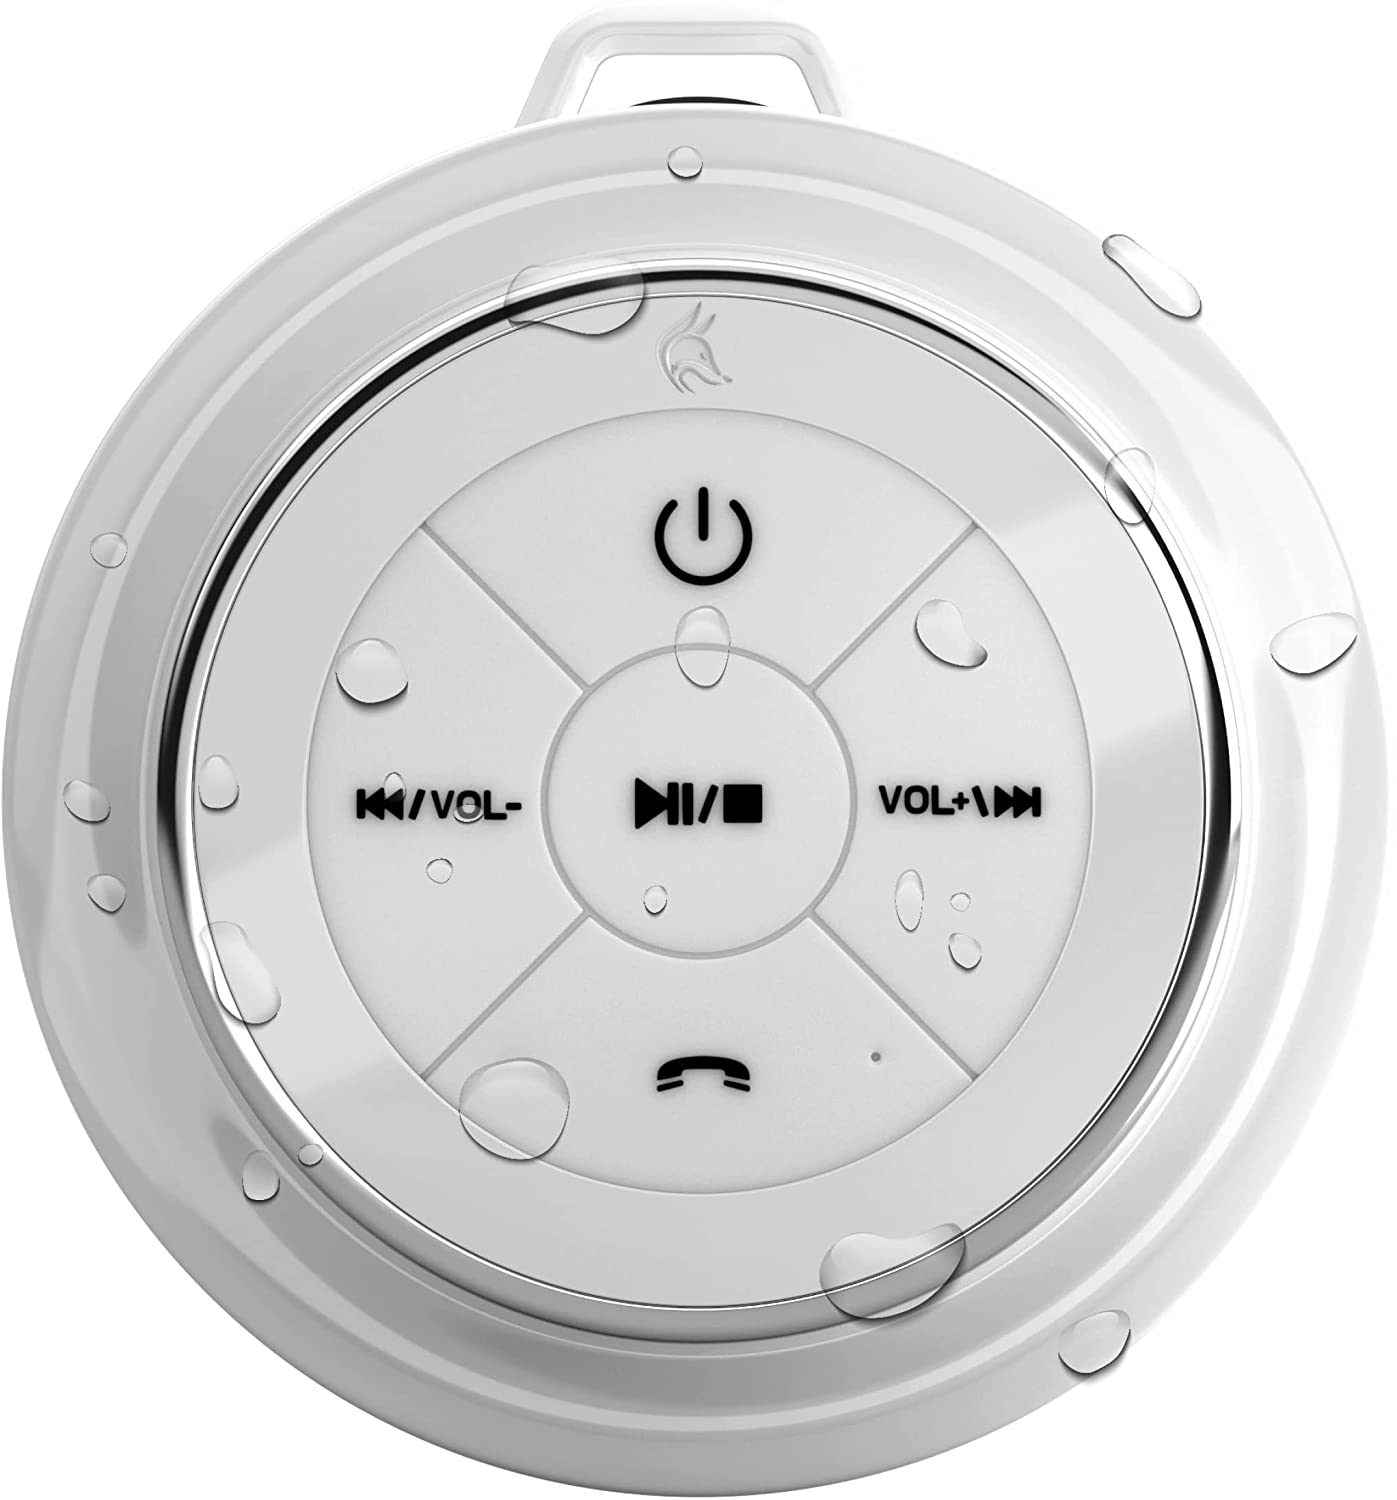 iFox Bluetooth Speaker iF012, Portable Speakers, IPX7 Waterproof, White - image 1 of 6